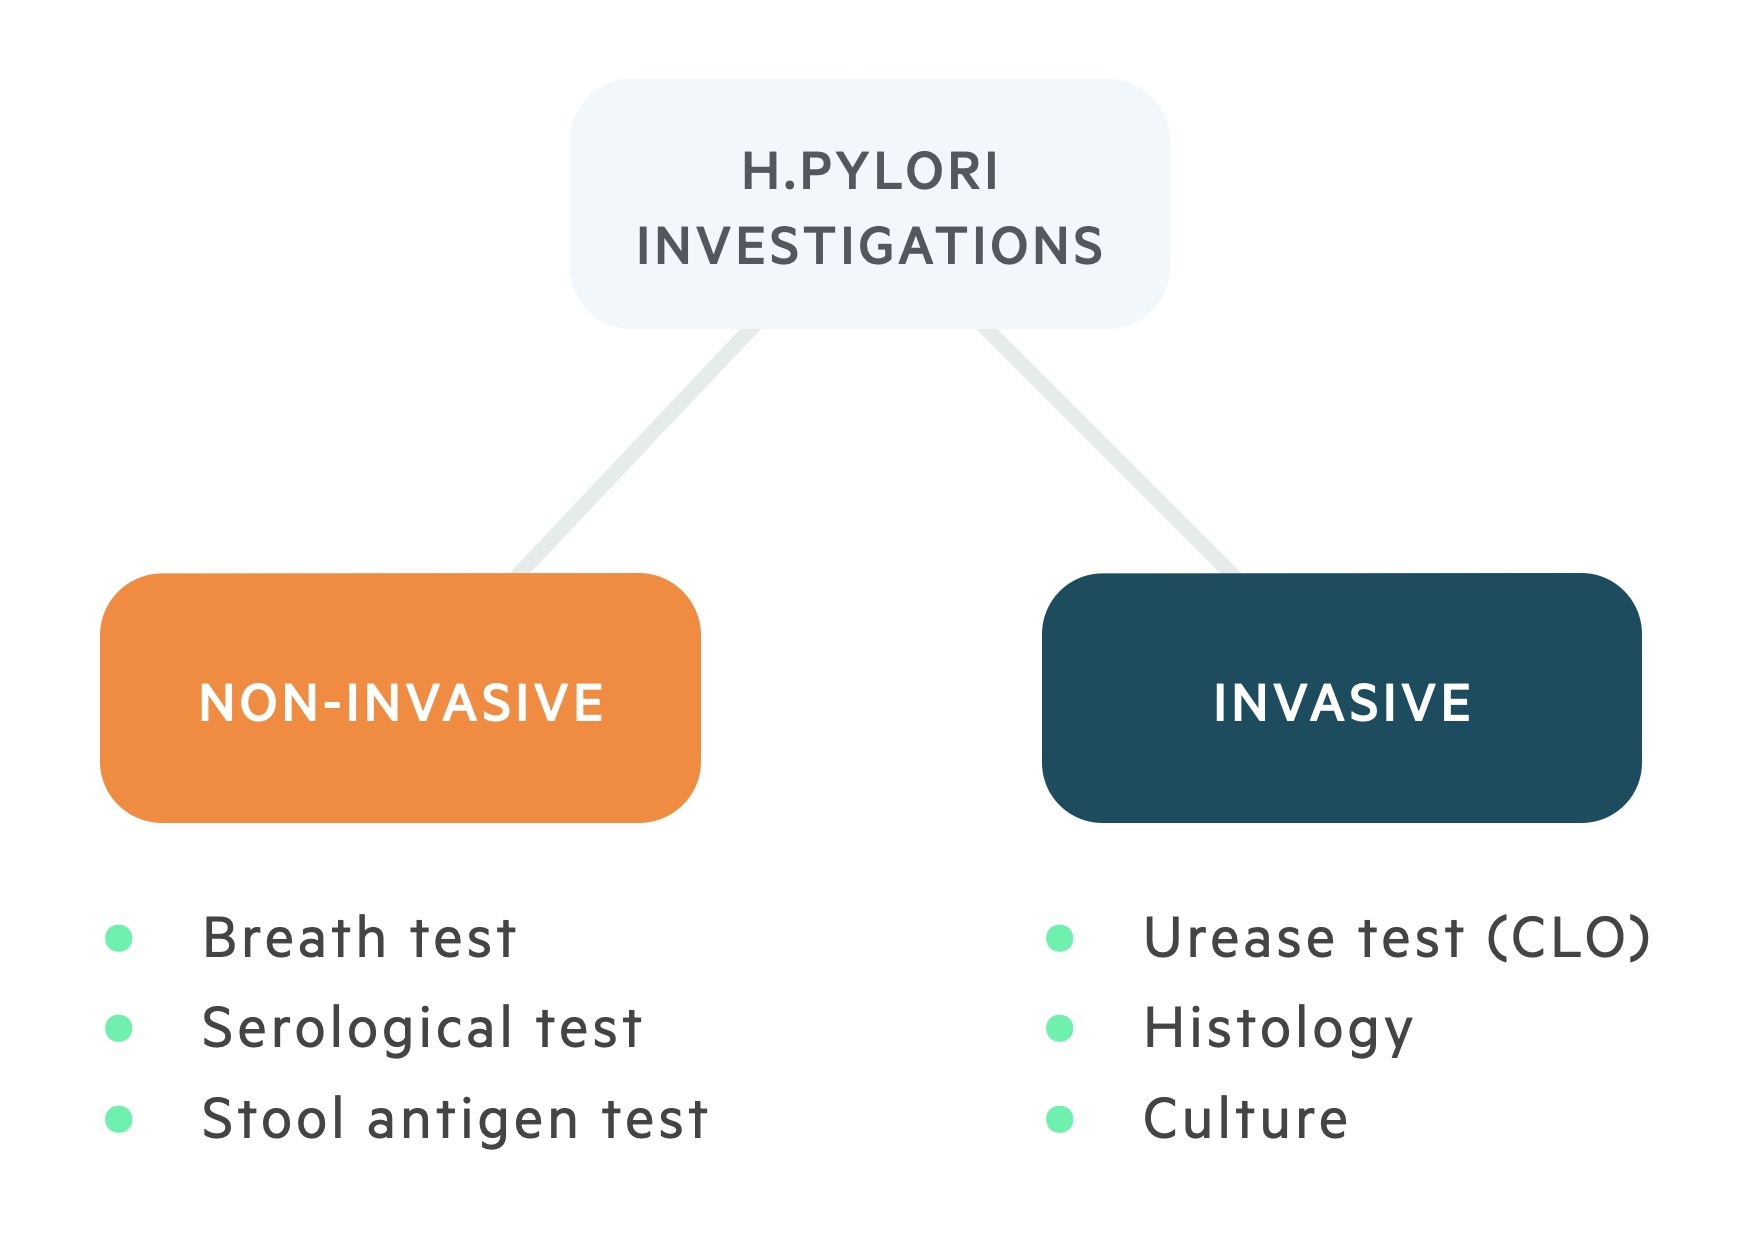 H.pylori investigations